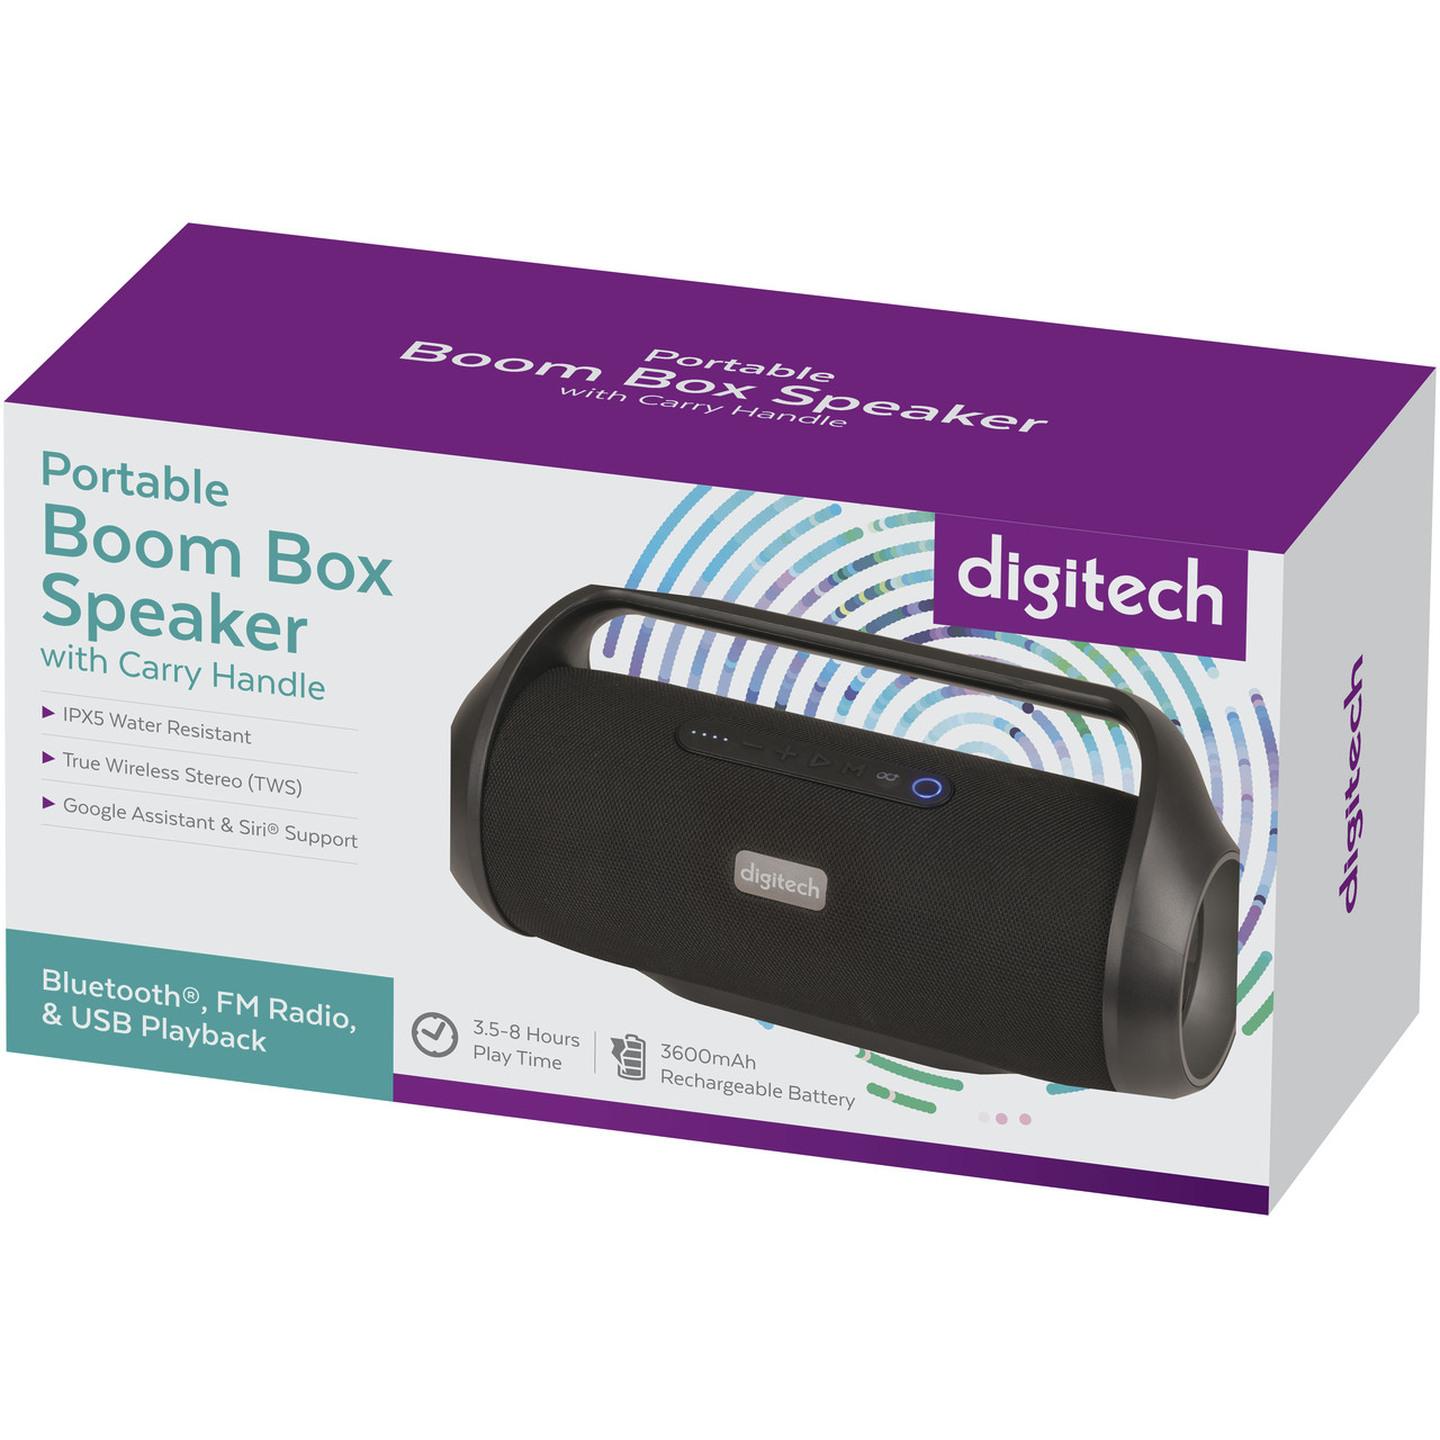 Portable Boom Box Speaker